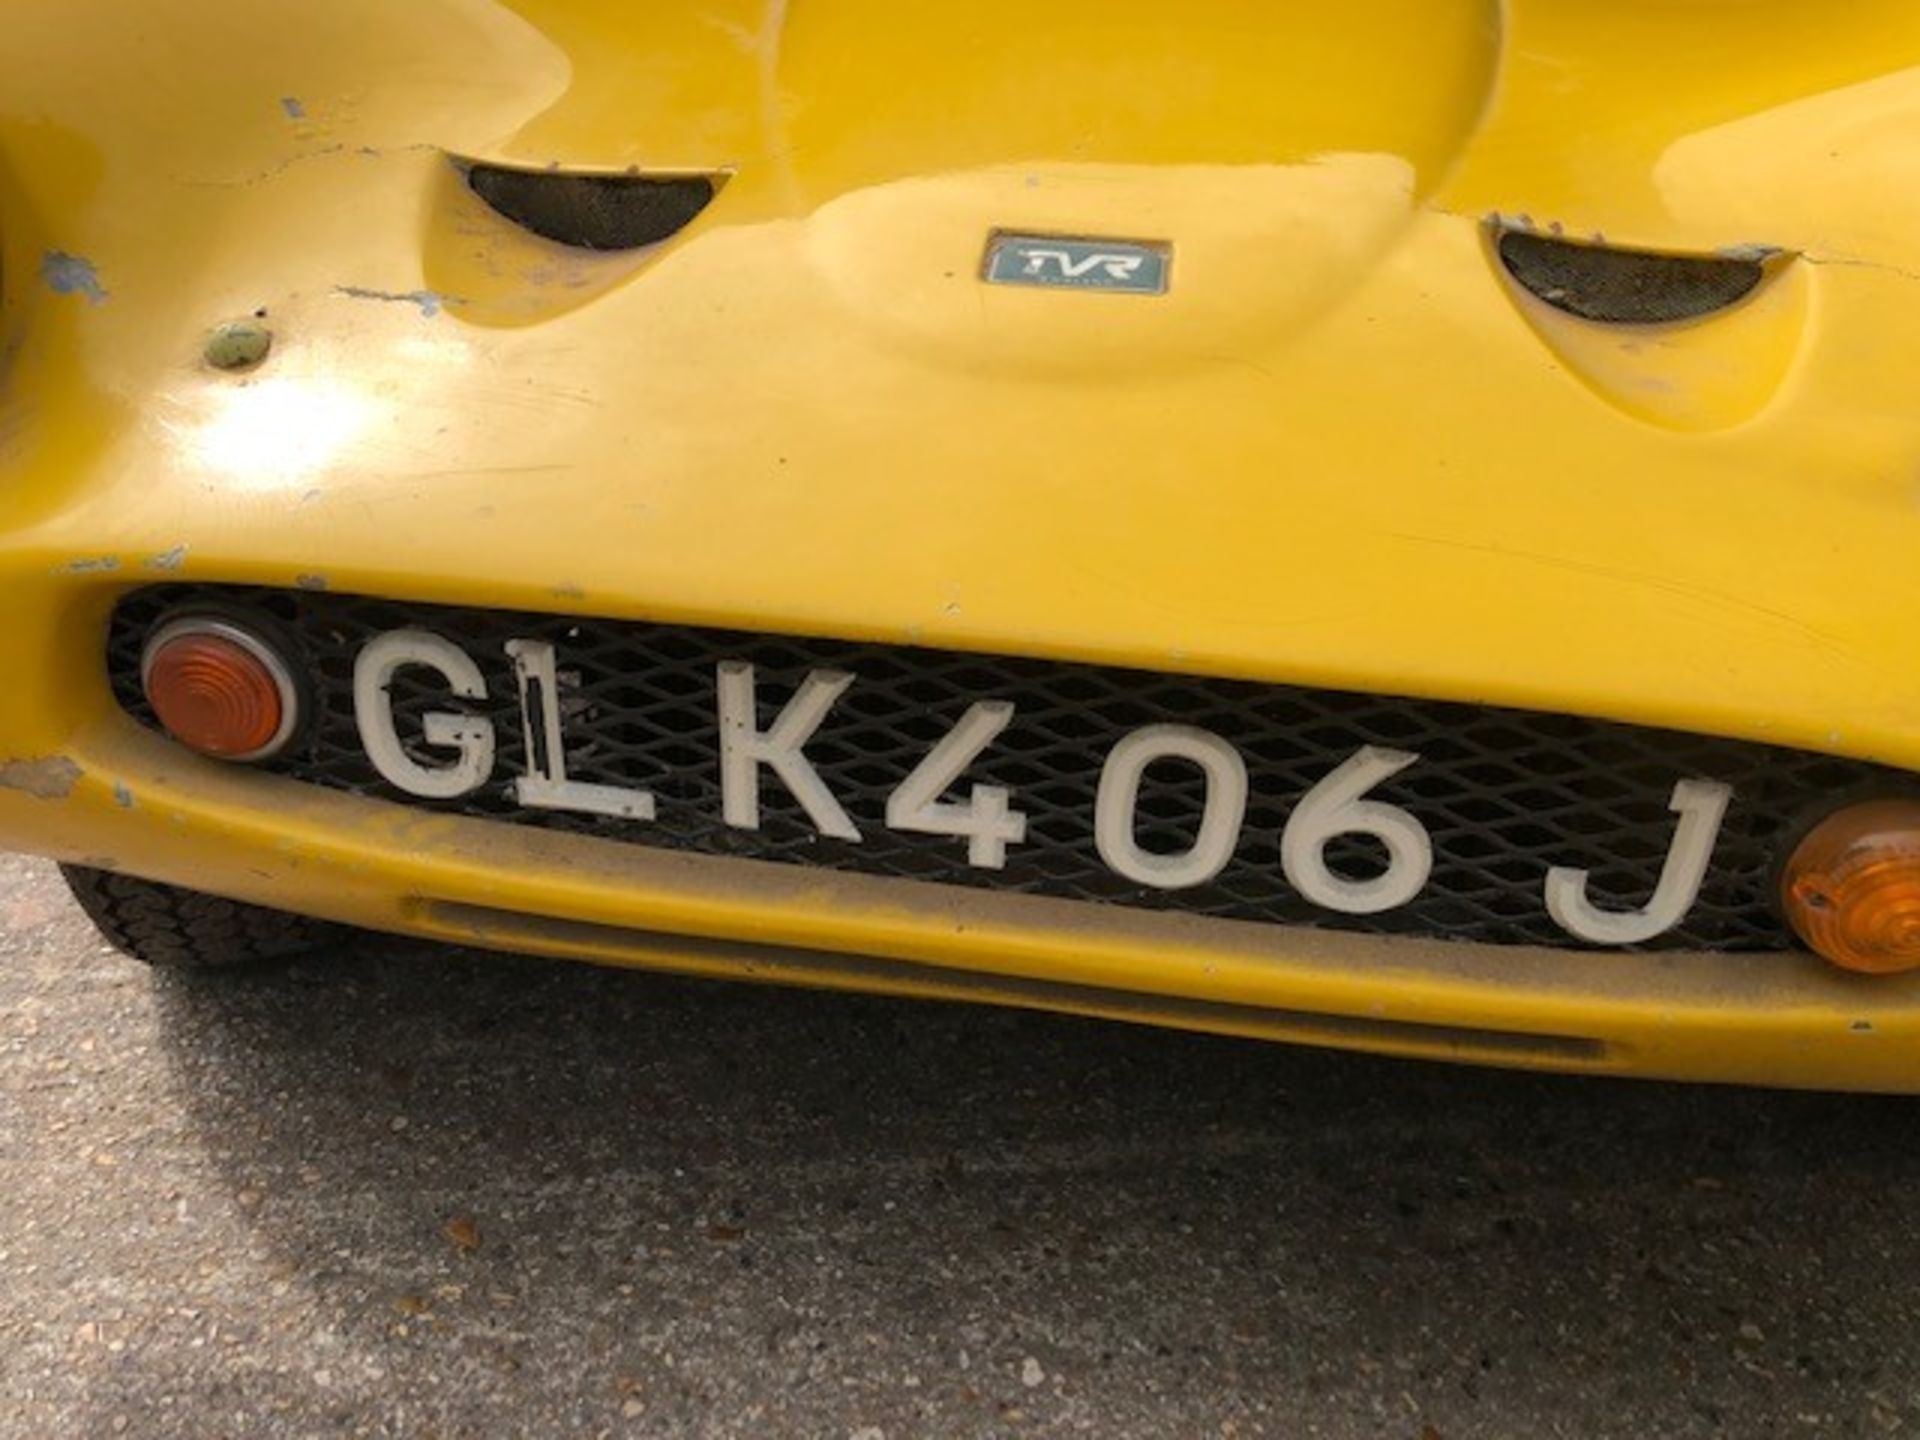 1971 TVR Tuscan Registration number GLK 406J Chassis number LVX18706 Engine number 1429 Yellow - Image 4 of 86